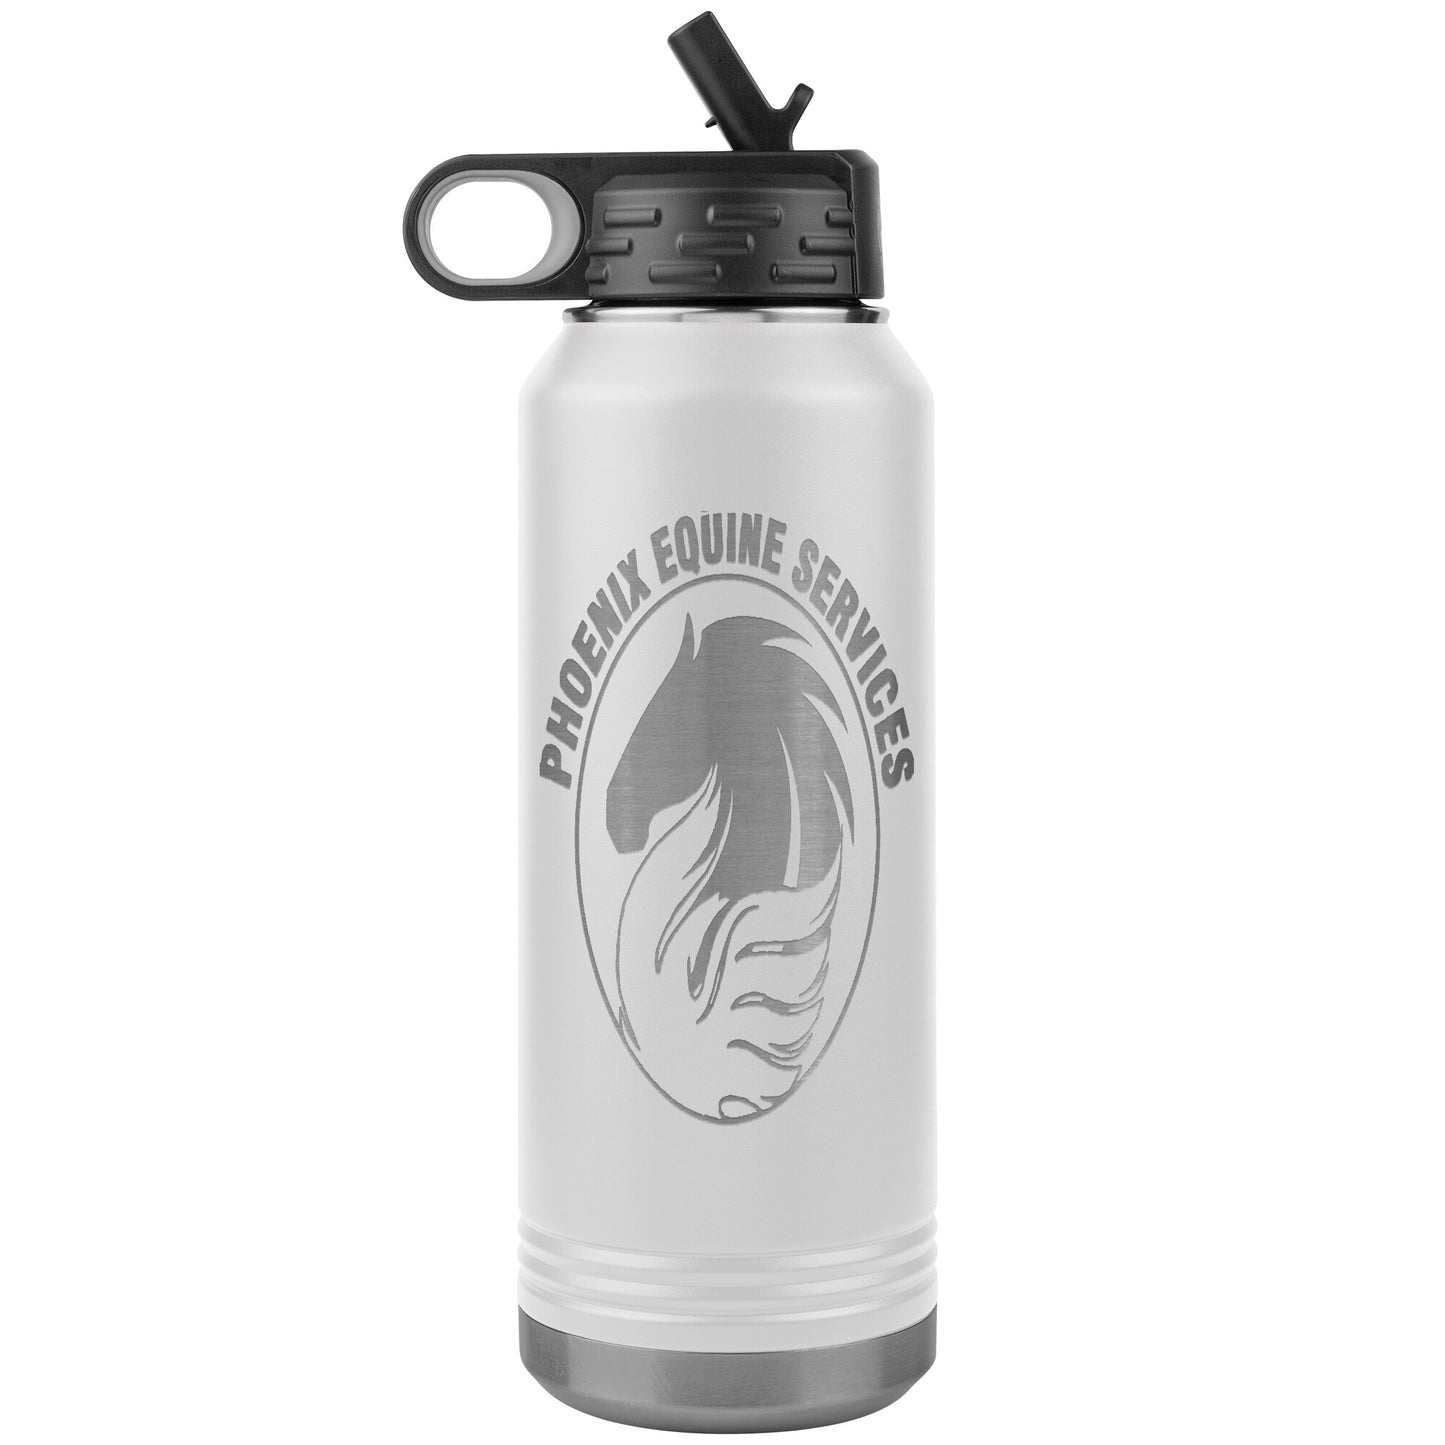 Phoenix Equestrian Logo 32oz Insulated Stainless Steel Water Bottle